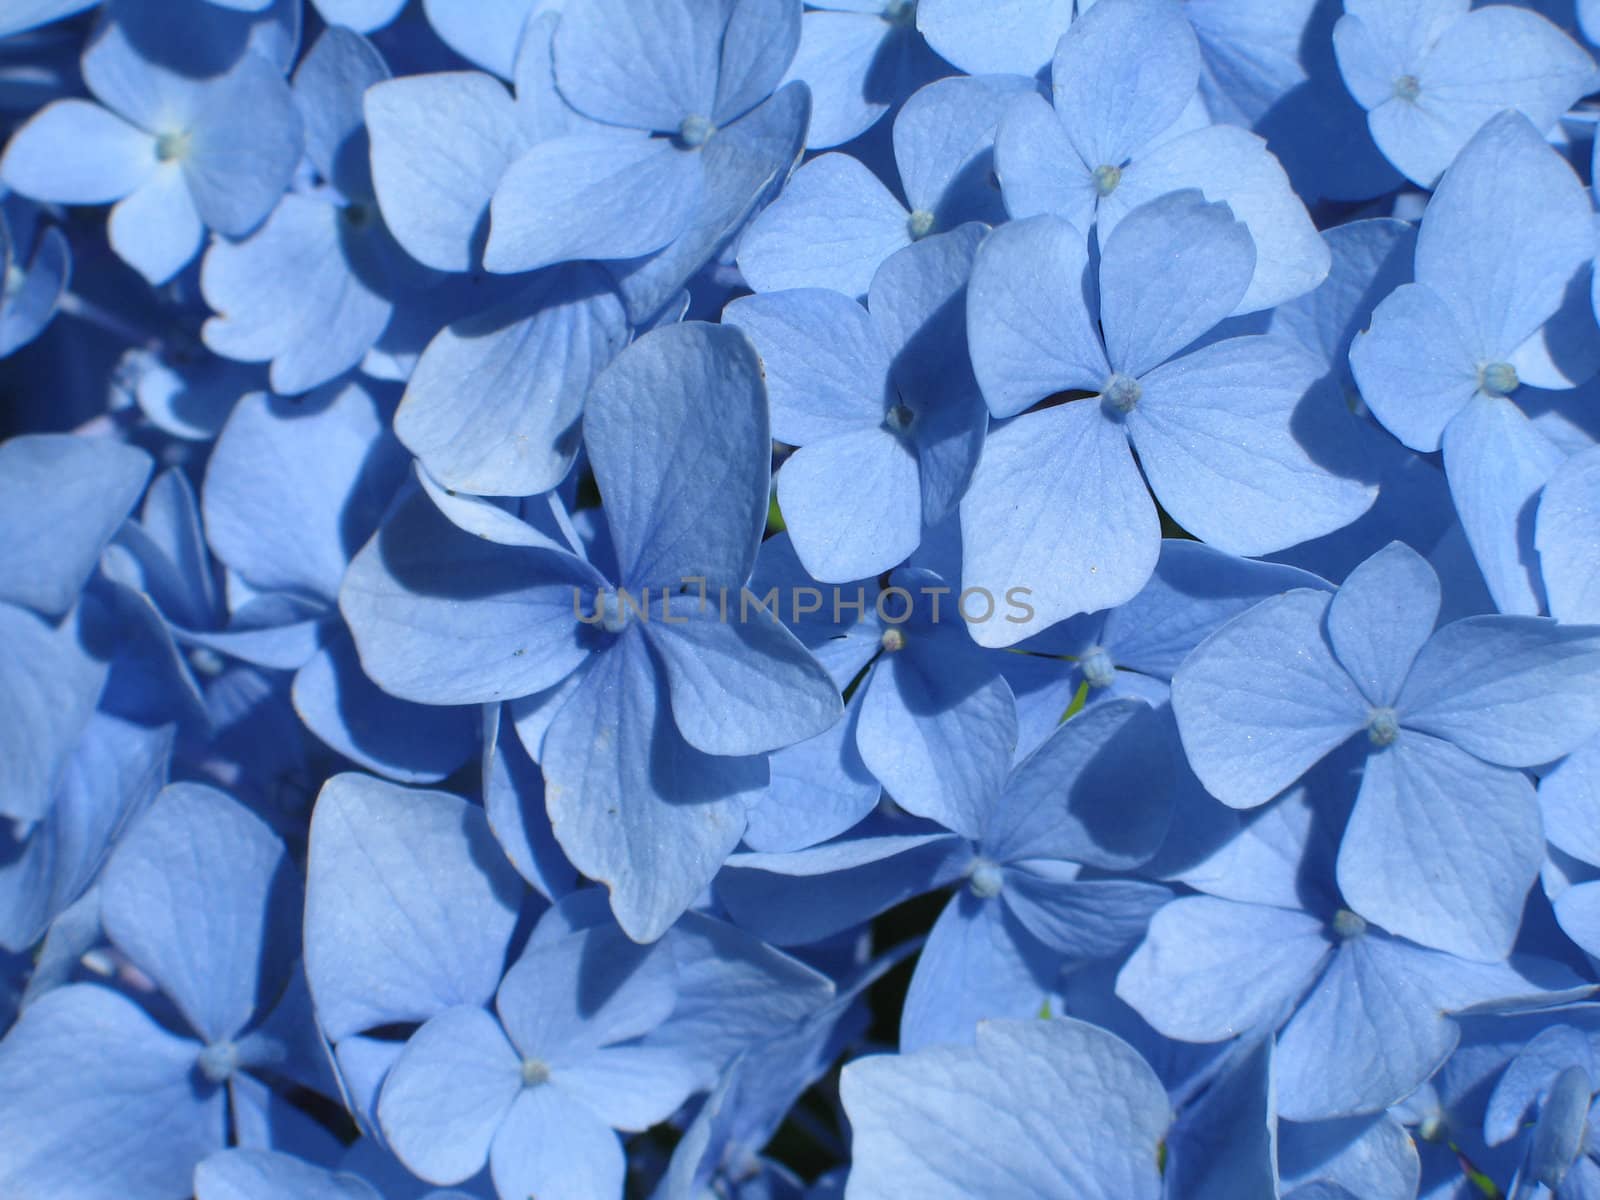 blue hydrangea close-up by mmm